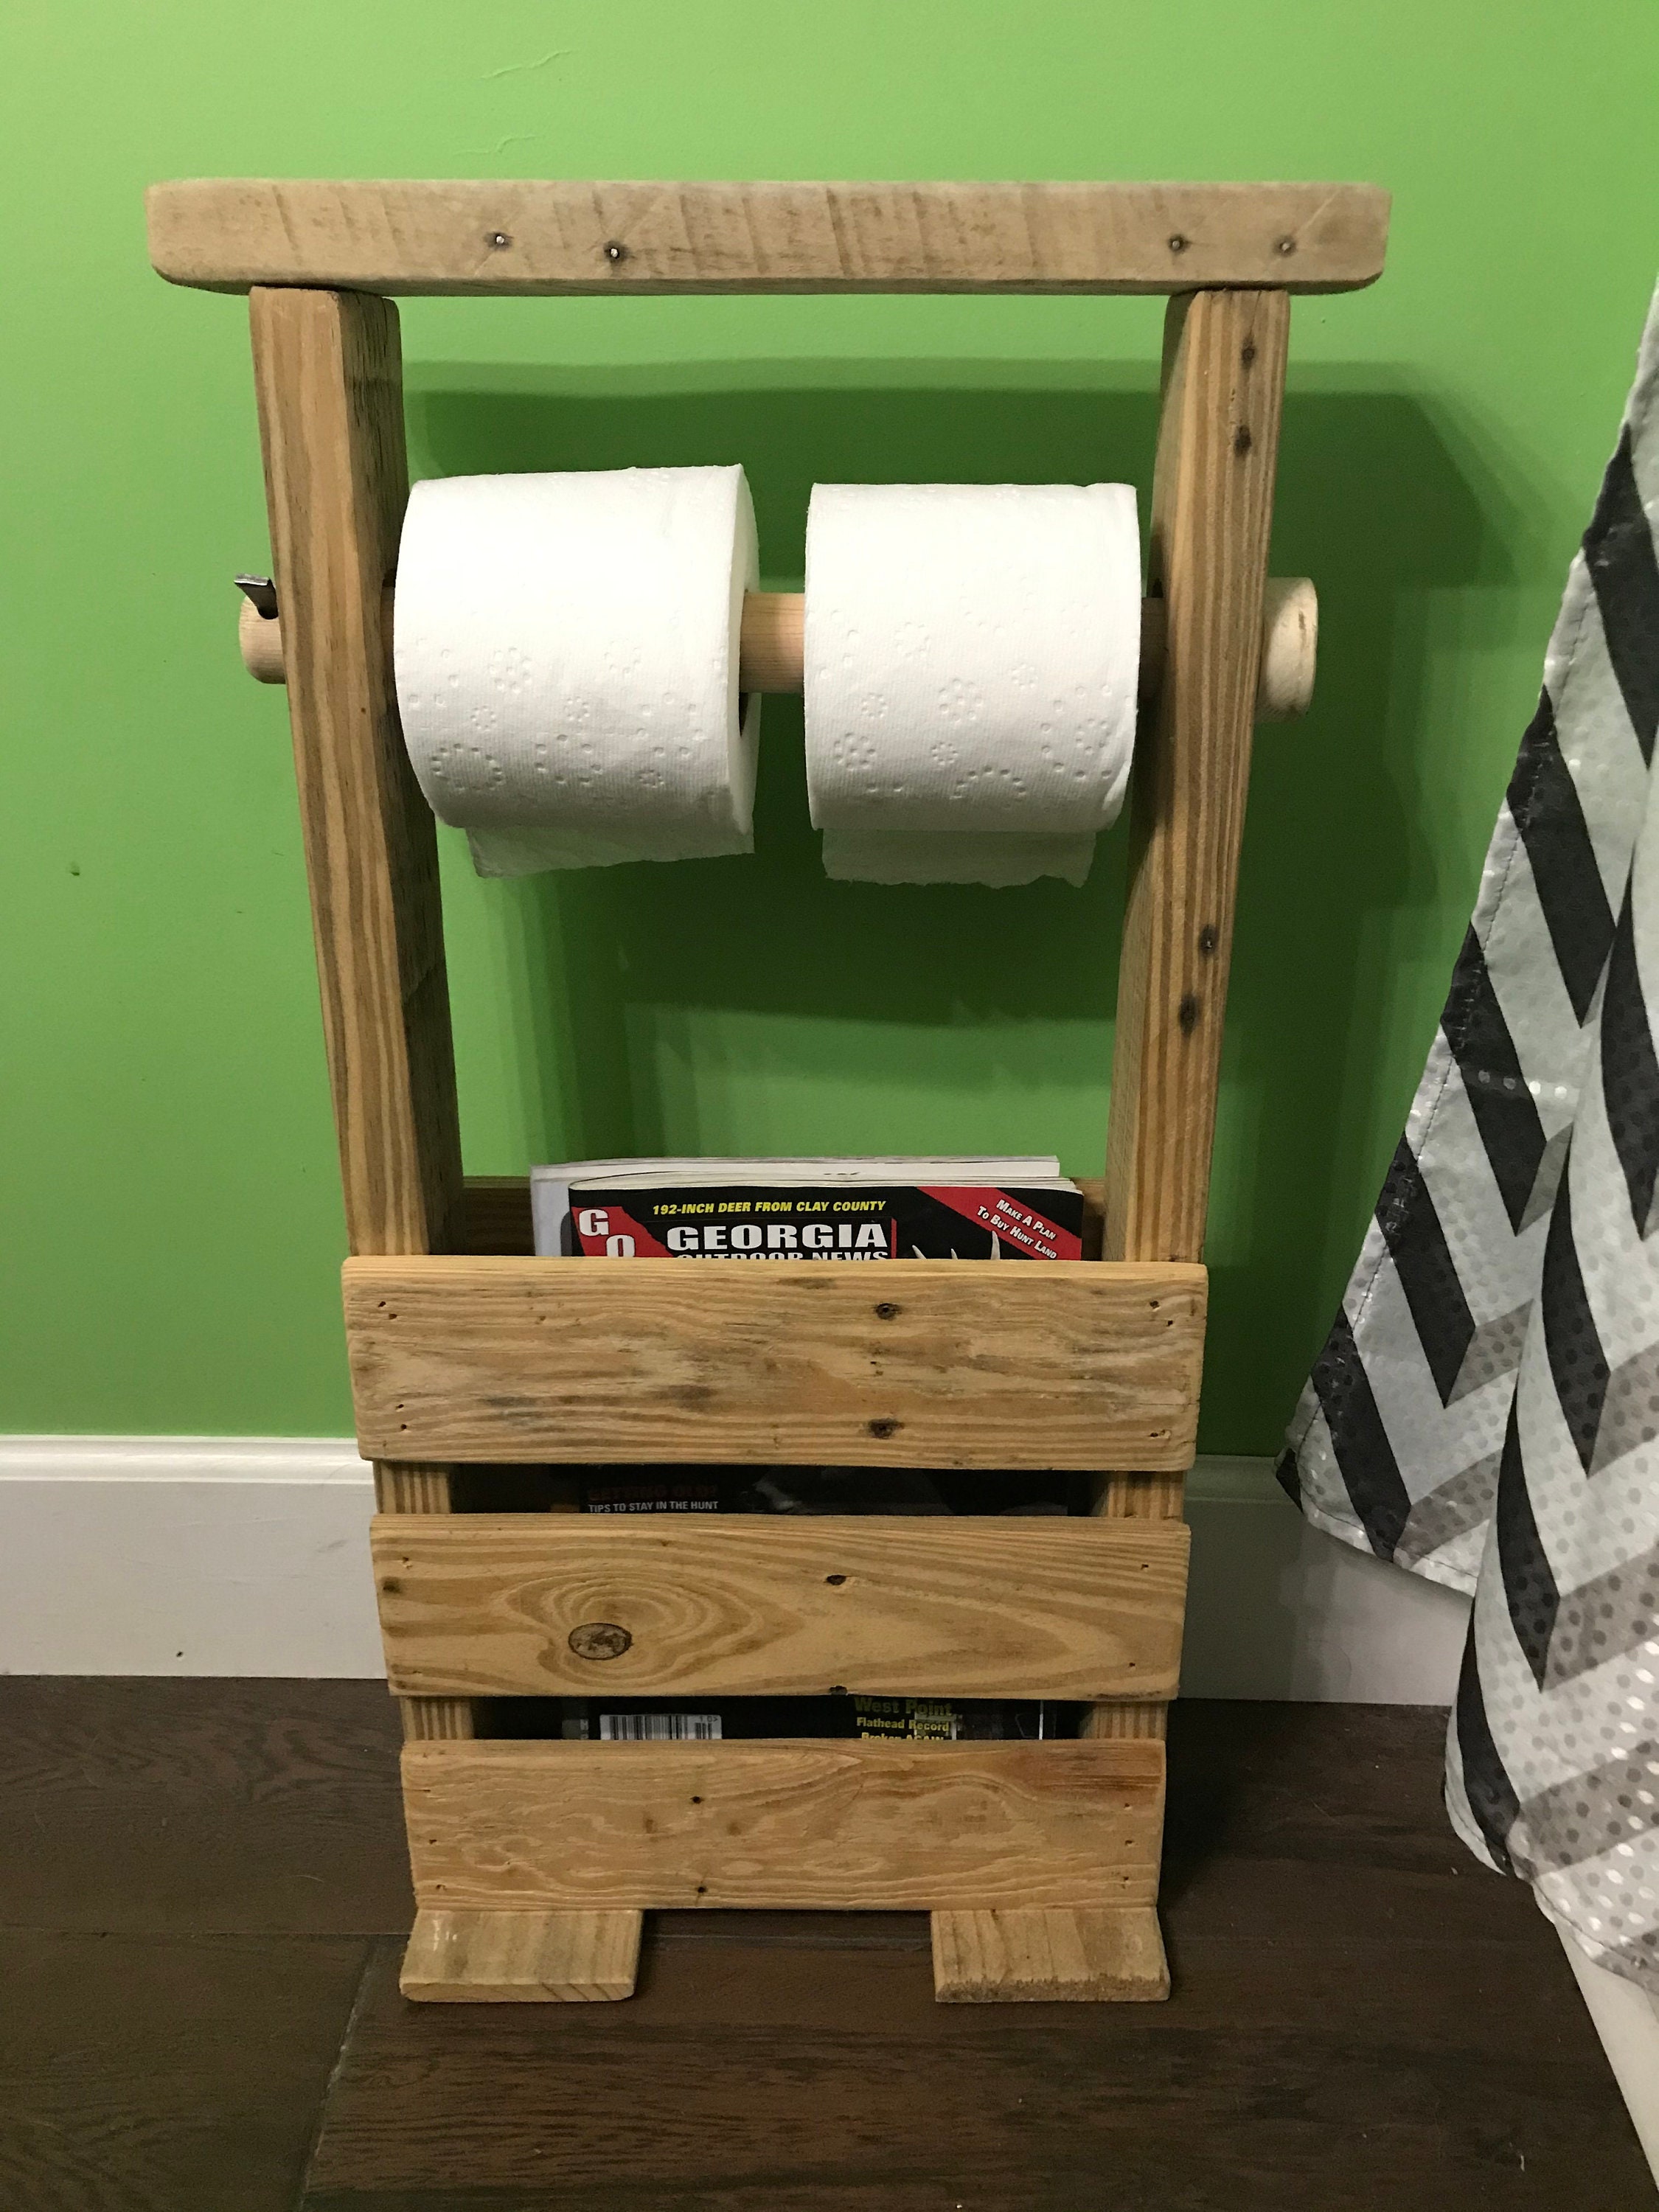 Eden Wall Toilet Paper Holder and Magazine Rack